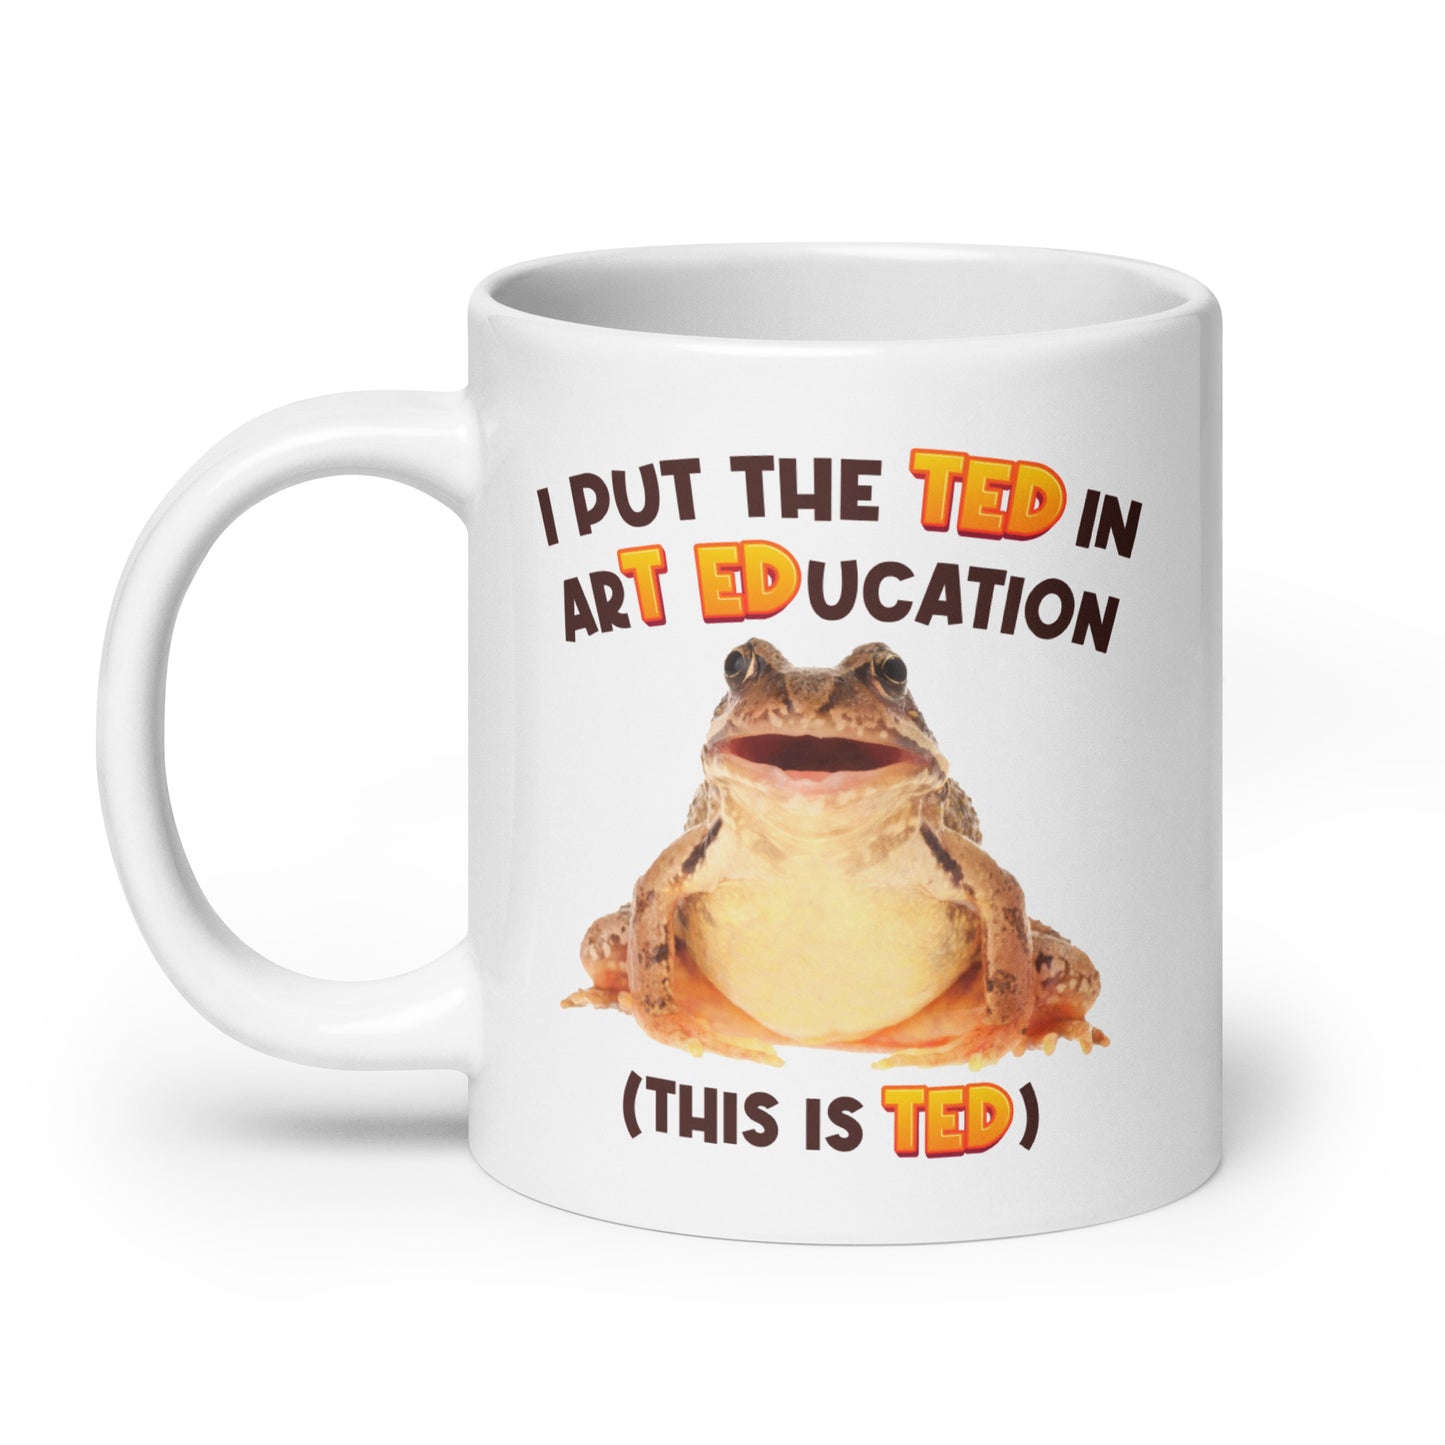 I Put the TED in arT EDucation mug